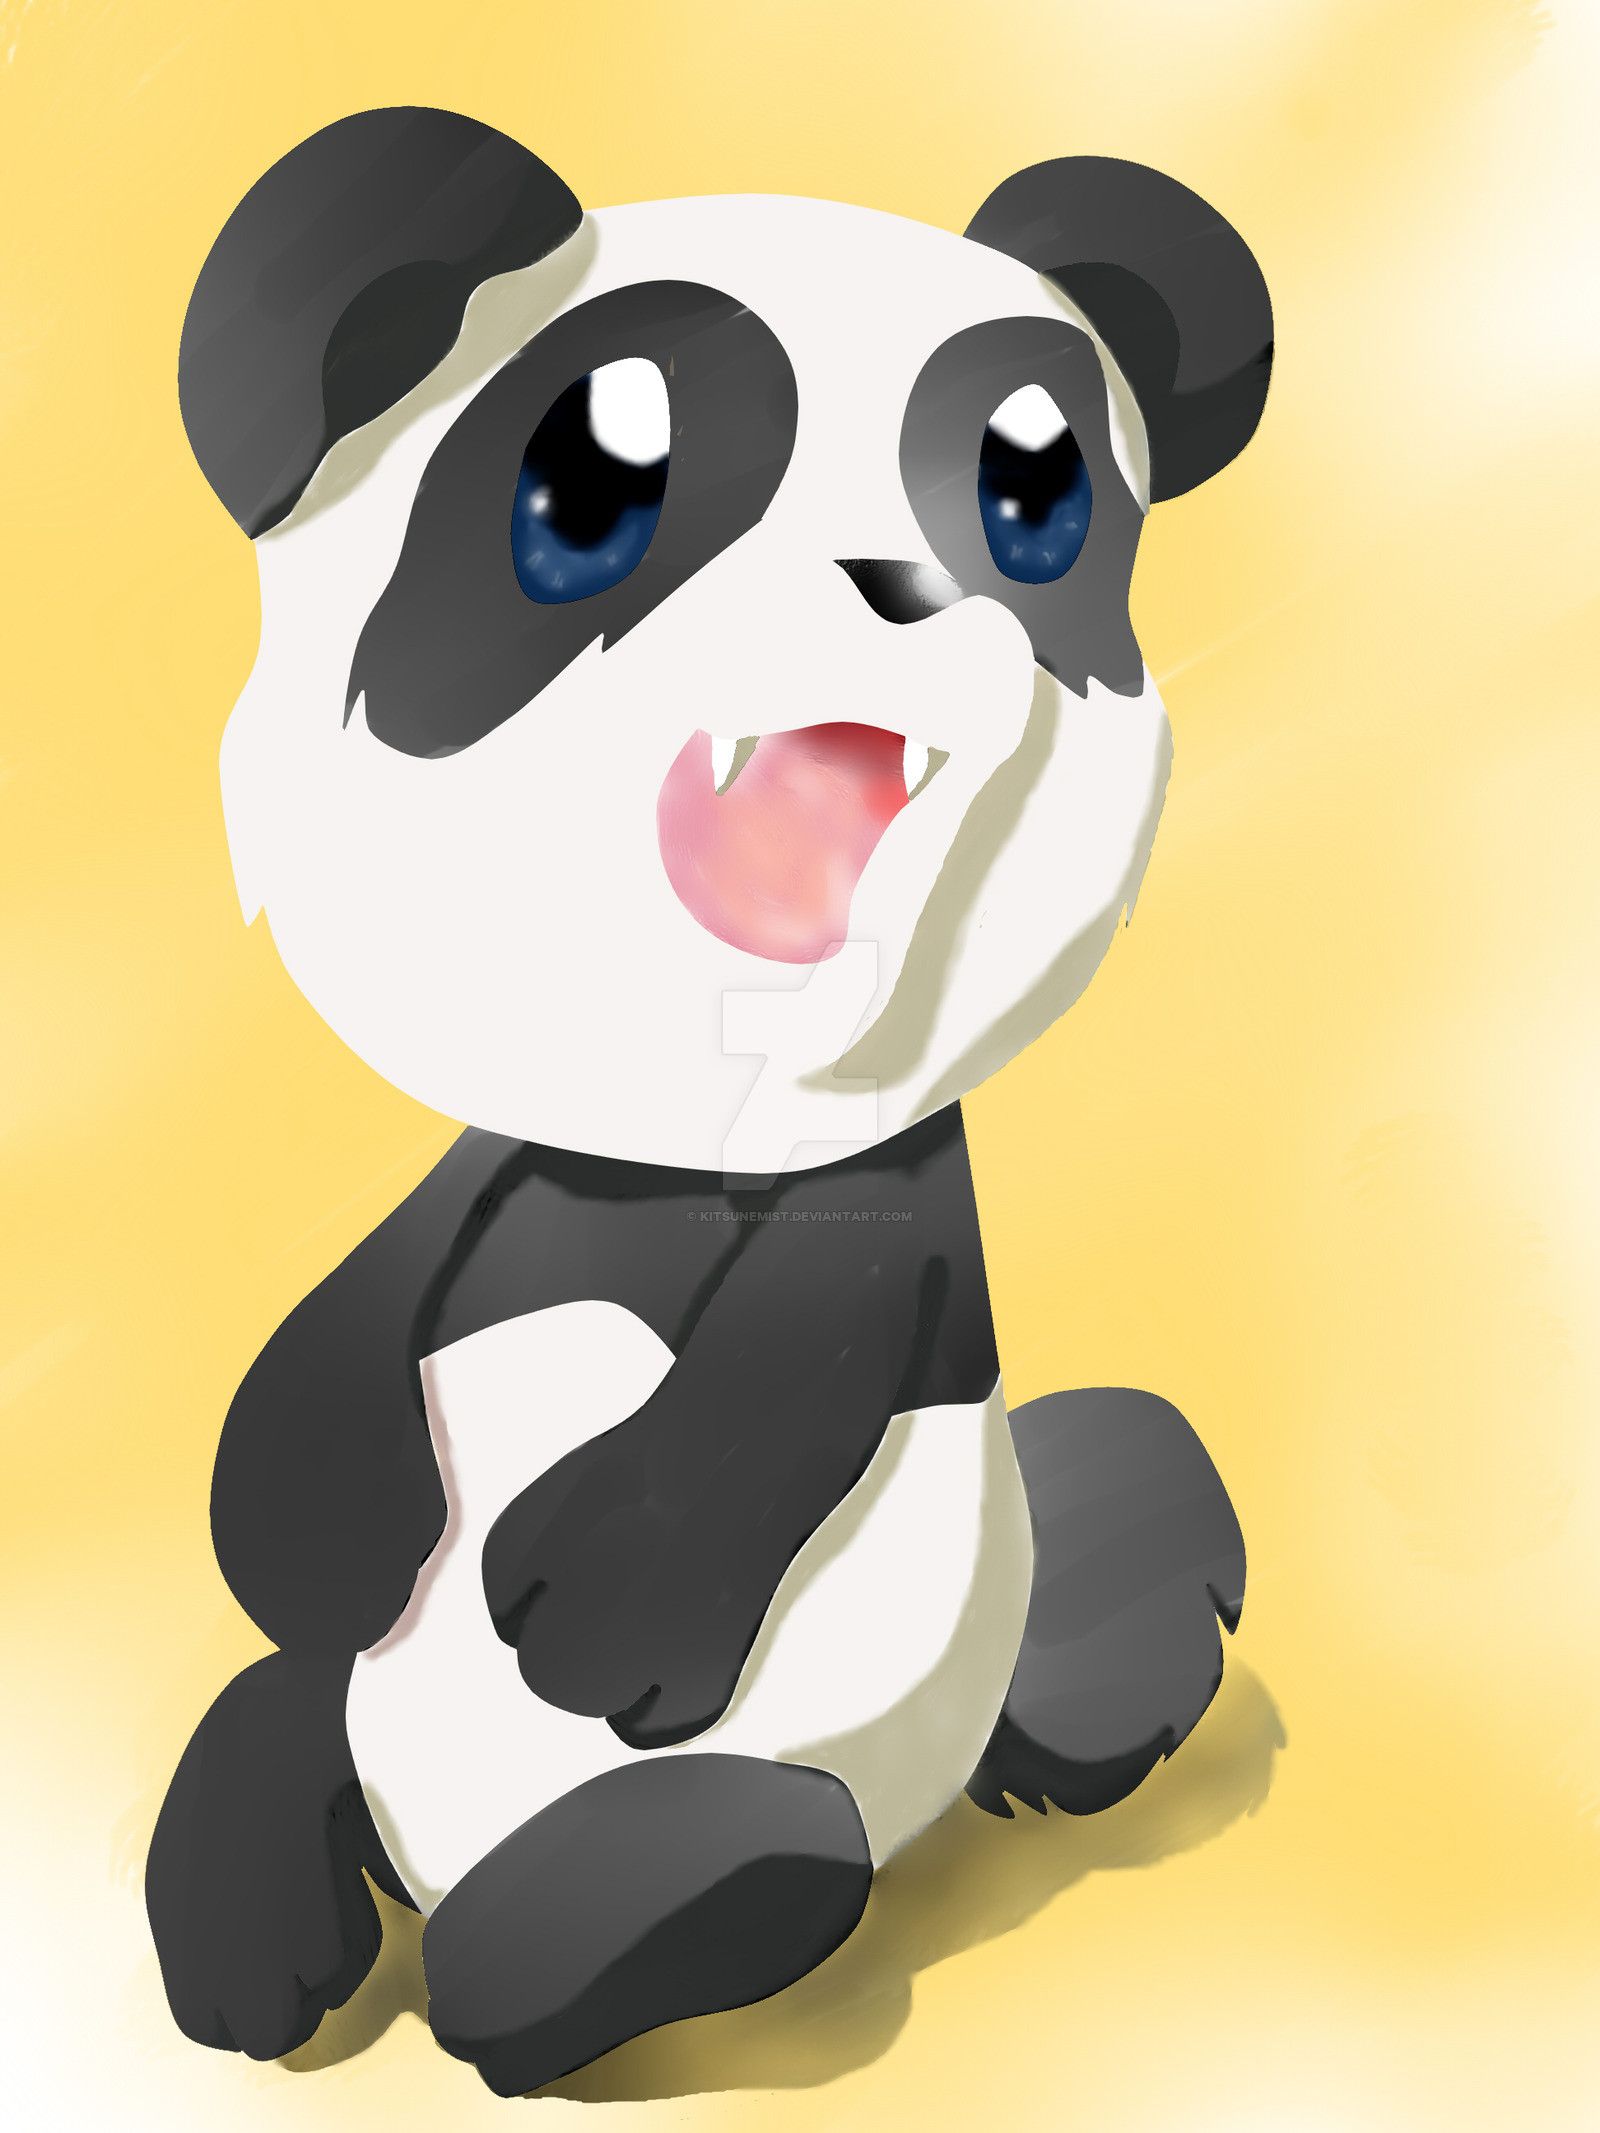 Anime Panda Hd Transparent, Cherish Animal Protection Day Crayon Texture  Animal Panda, Cherish Animals, Red Pandas, Protect Animals PNG Image For  Free Download